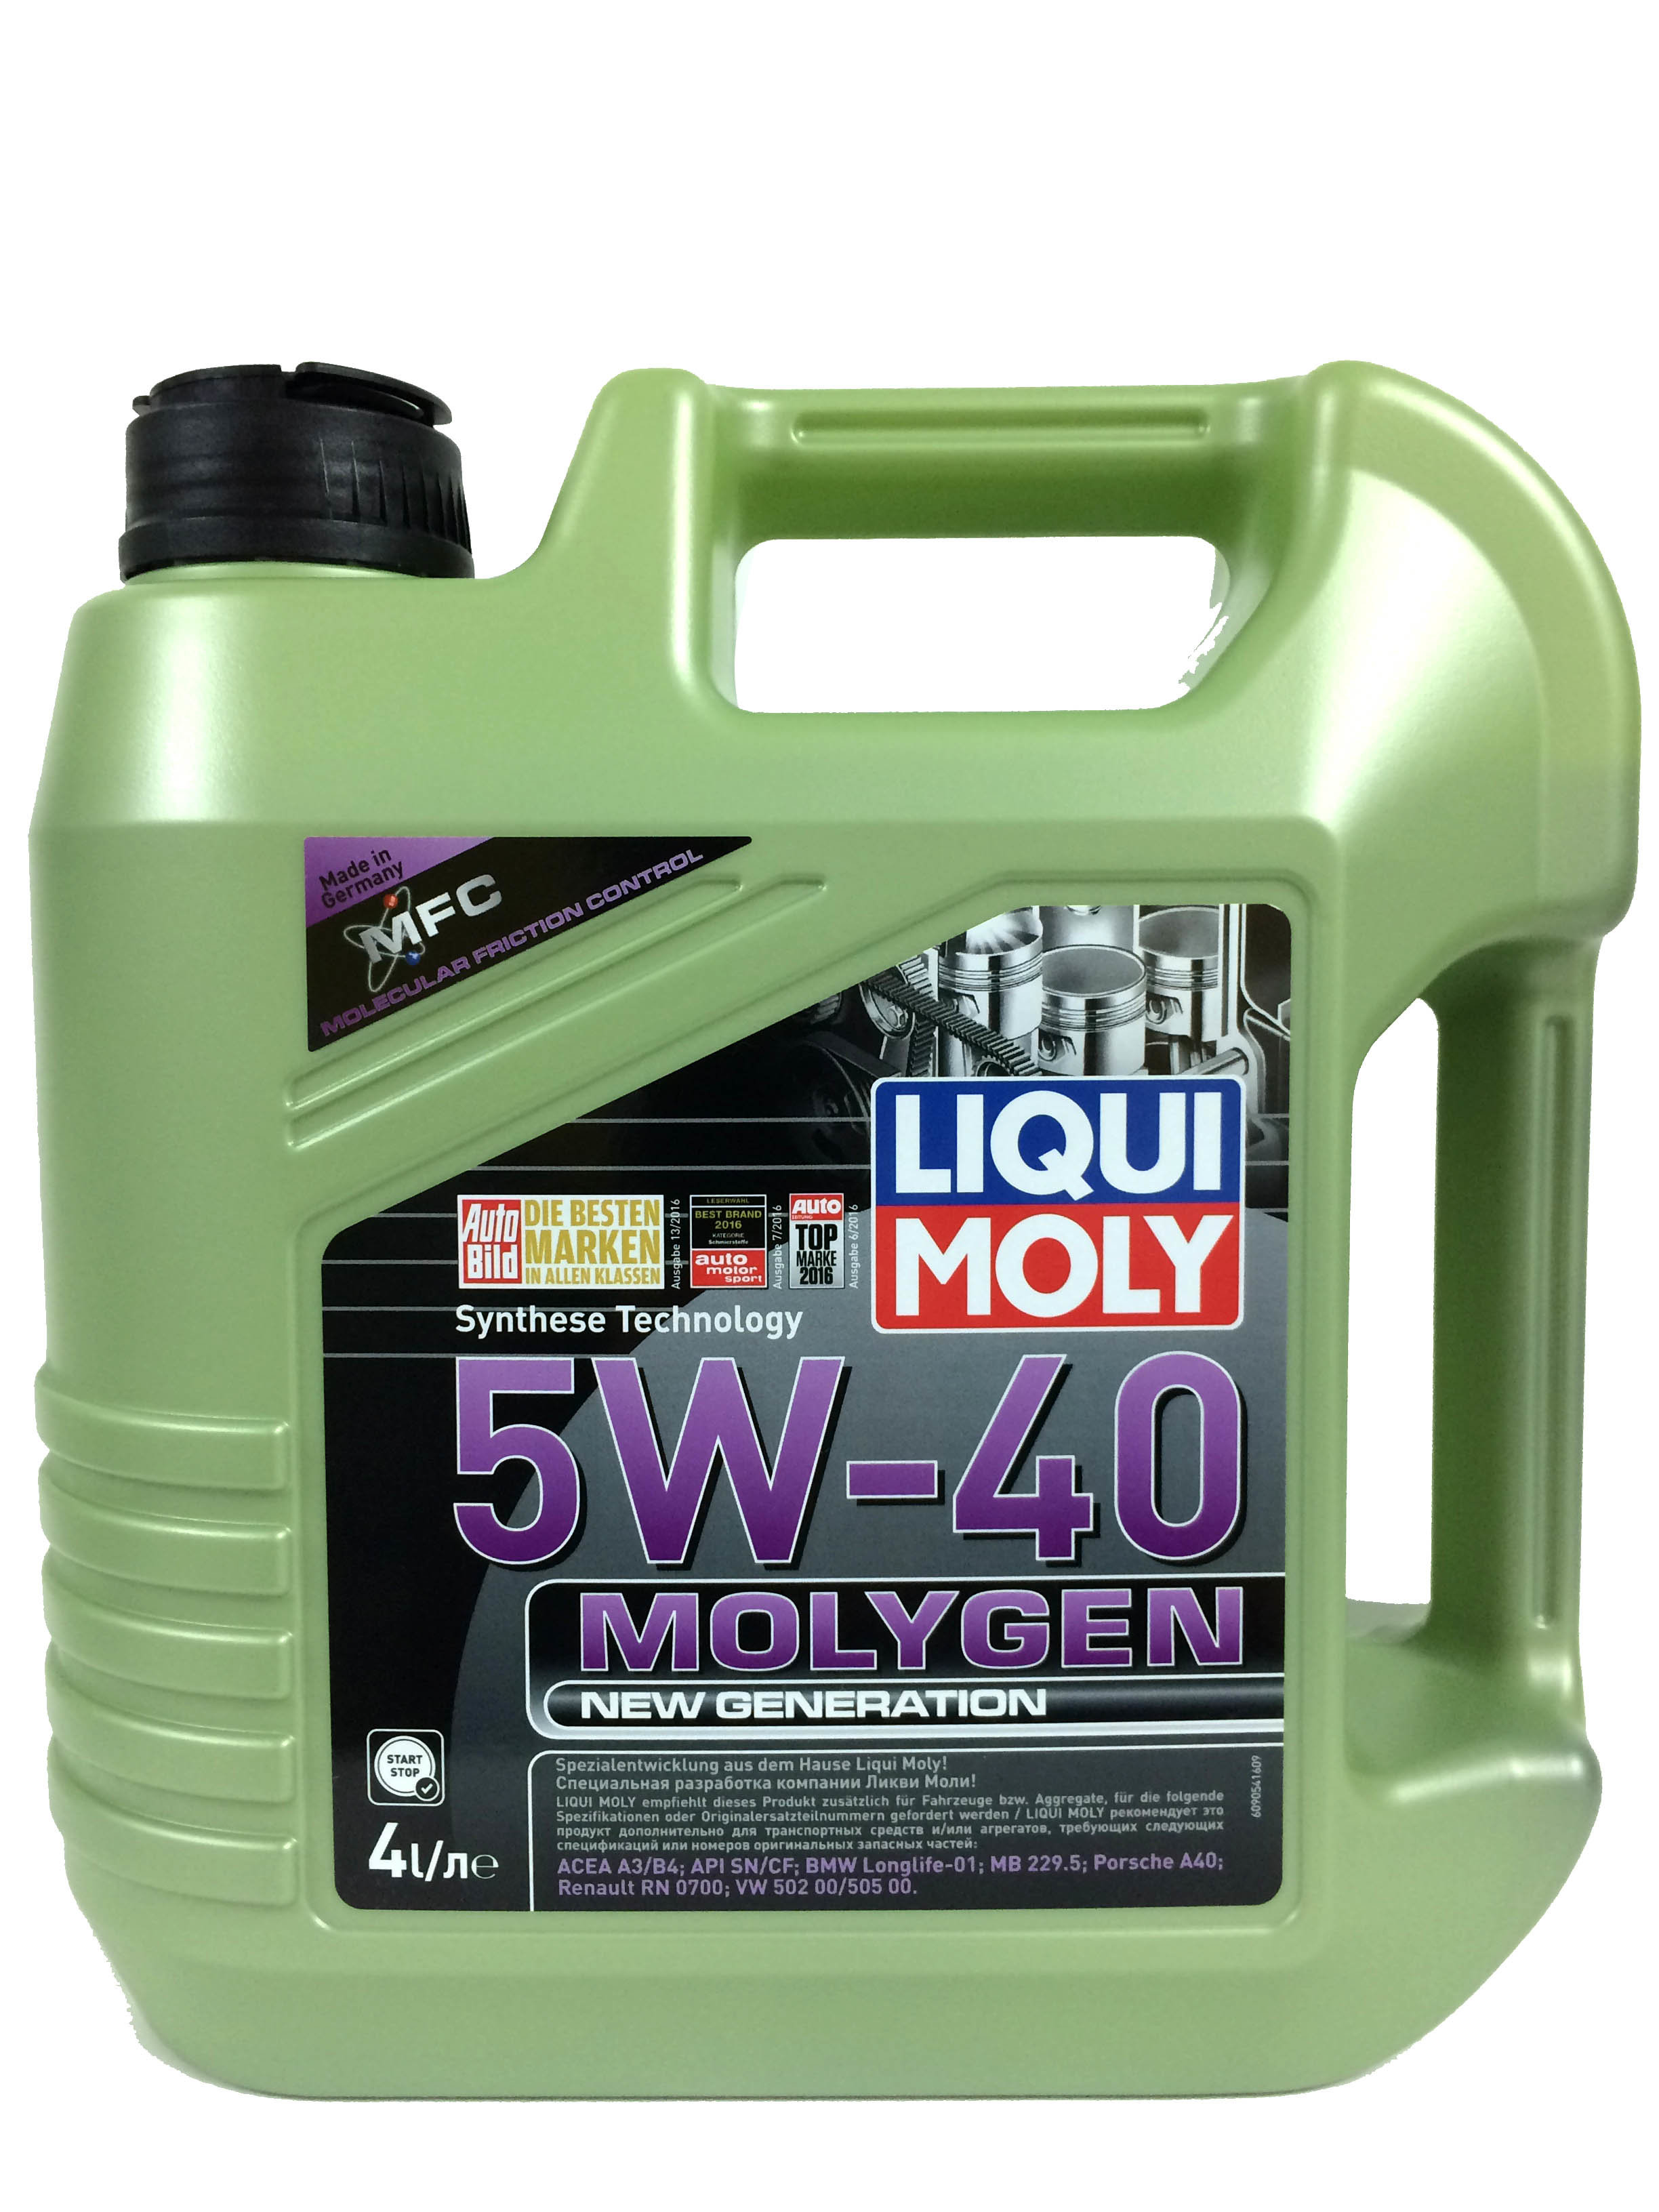 Моторные масла liqui moly 4 л. Molygen 5w-40. Масло Liqui Moly 5w40 Molygen. Liqui Moly Leichtlauf High Tech 5w-40. Ликви моли молиген 5w40.